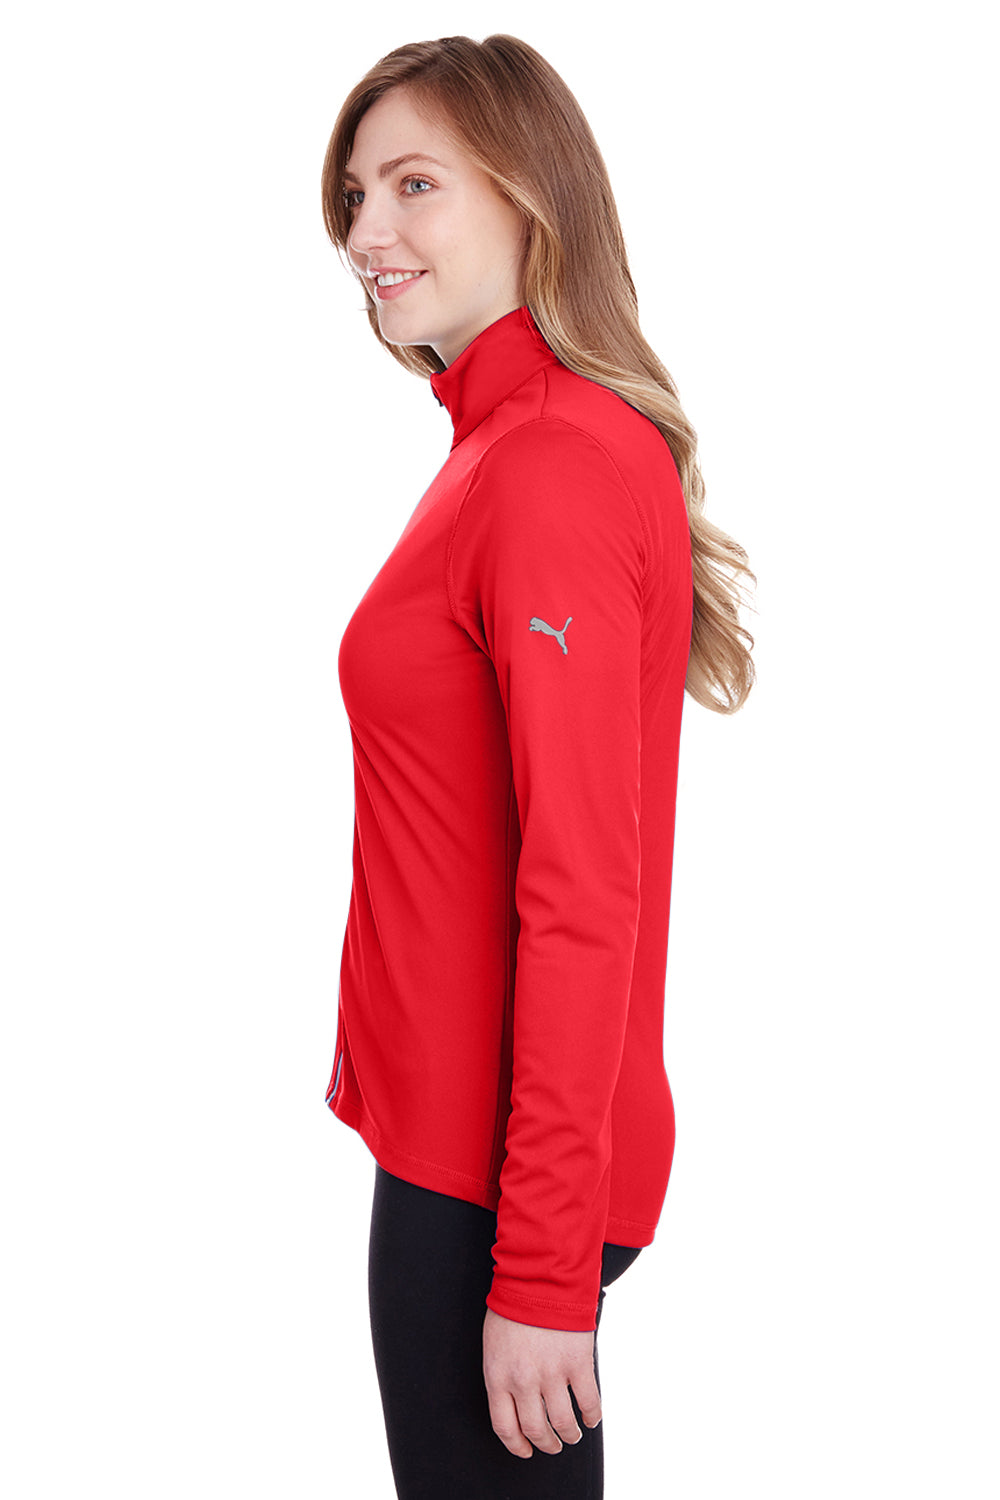 Puma 596803 Womens Icon Performance Moisture Wicking Full Zip Sweatshirt Red Side